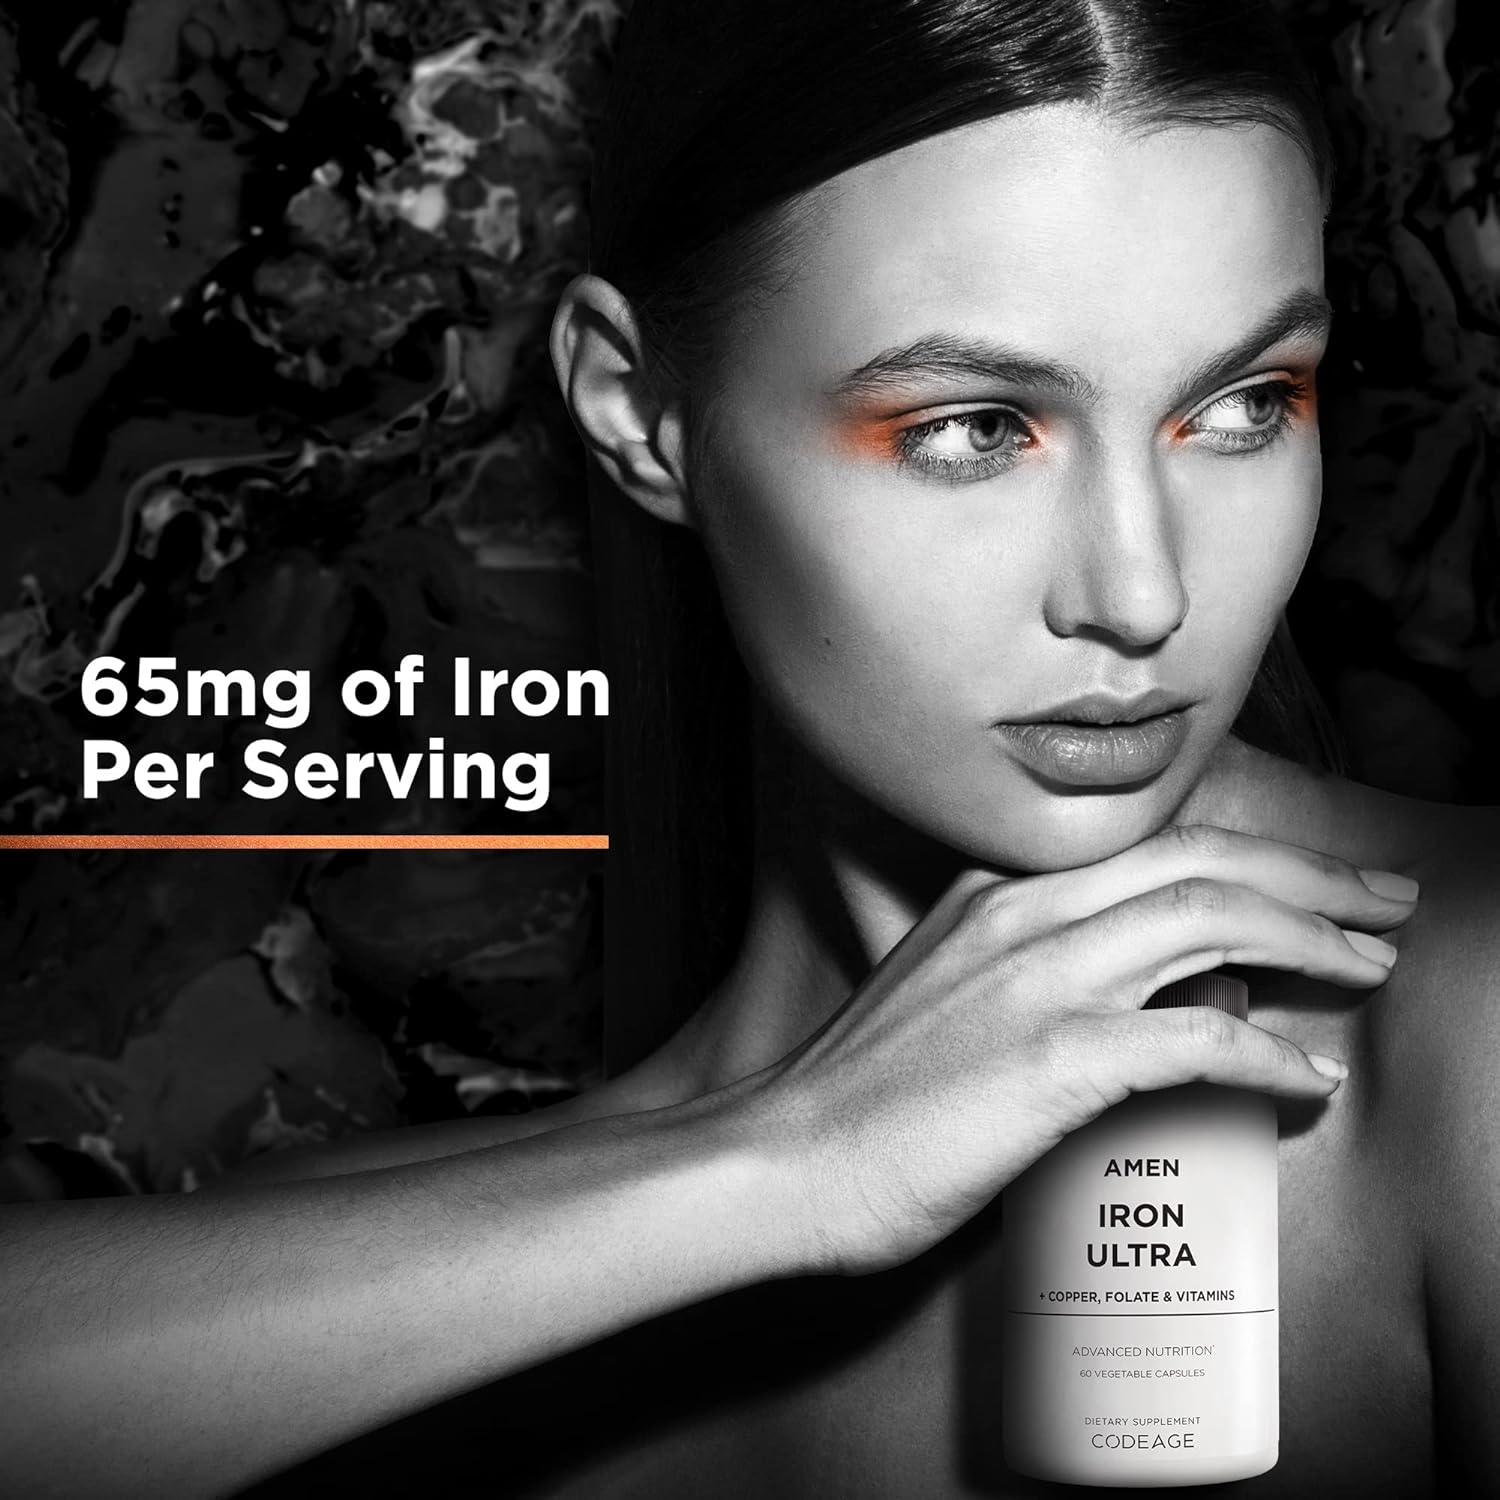 Amen Iron Ultra Supplement + Copper, Folate, Vitamin C and Vitamin B12-2-Month Supply - Ferrous Sulfate Iron Vitamin - Iron 65mg Per Serving - Iron Folic Acid - Non-GMO Iron Pills - 60 Capsules : Health & Household